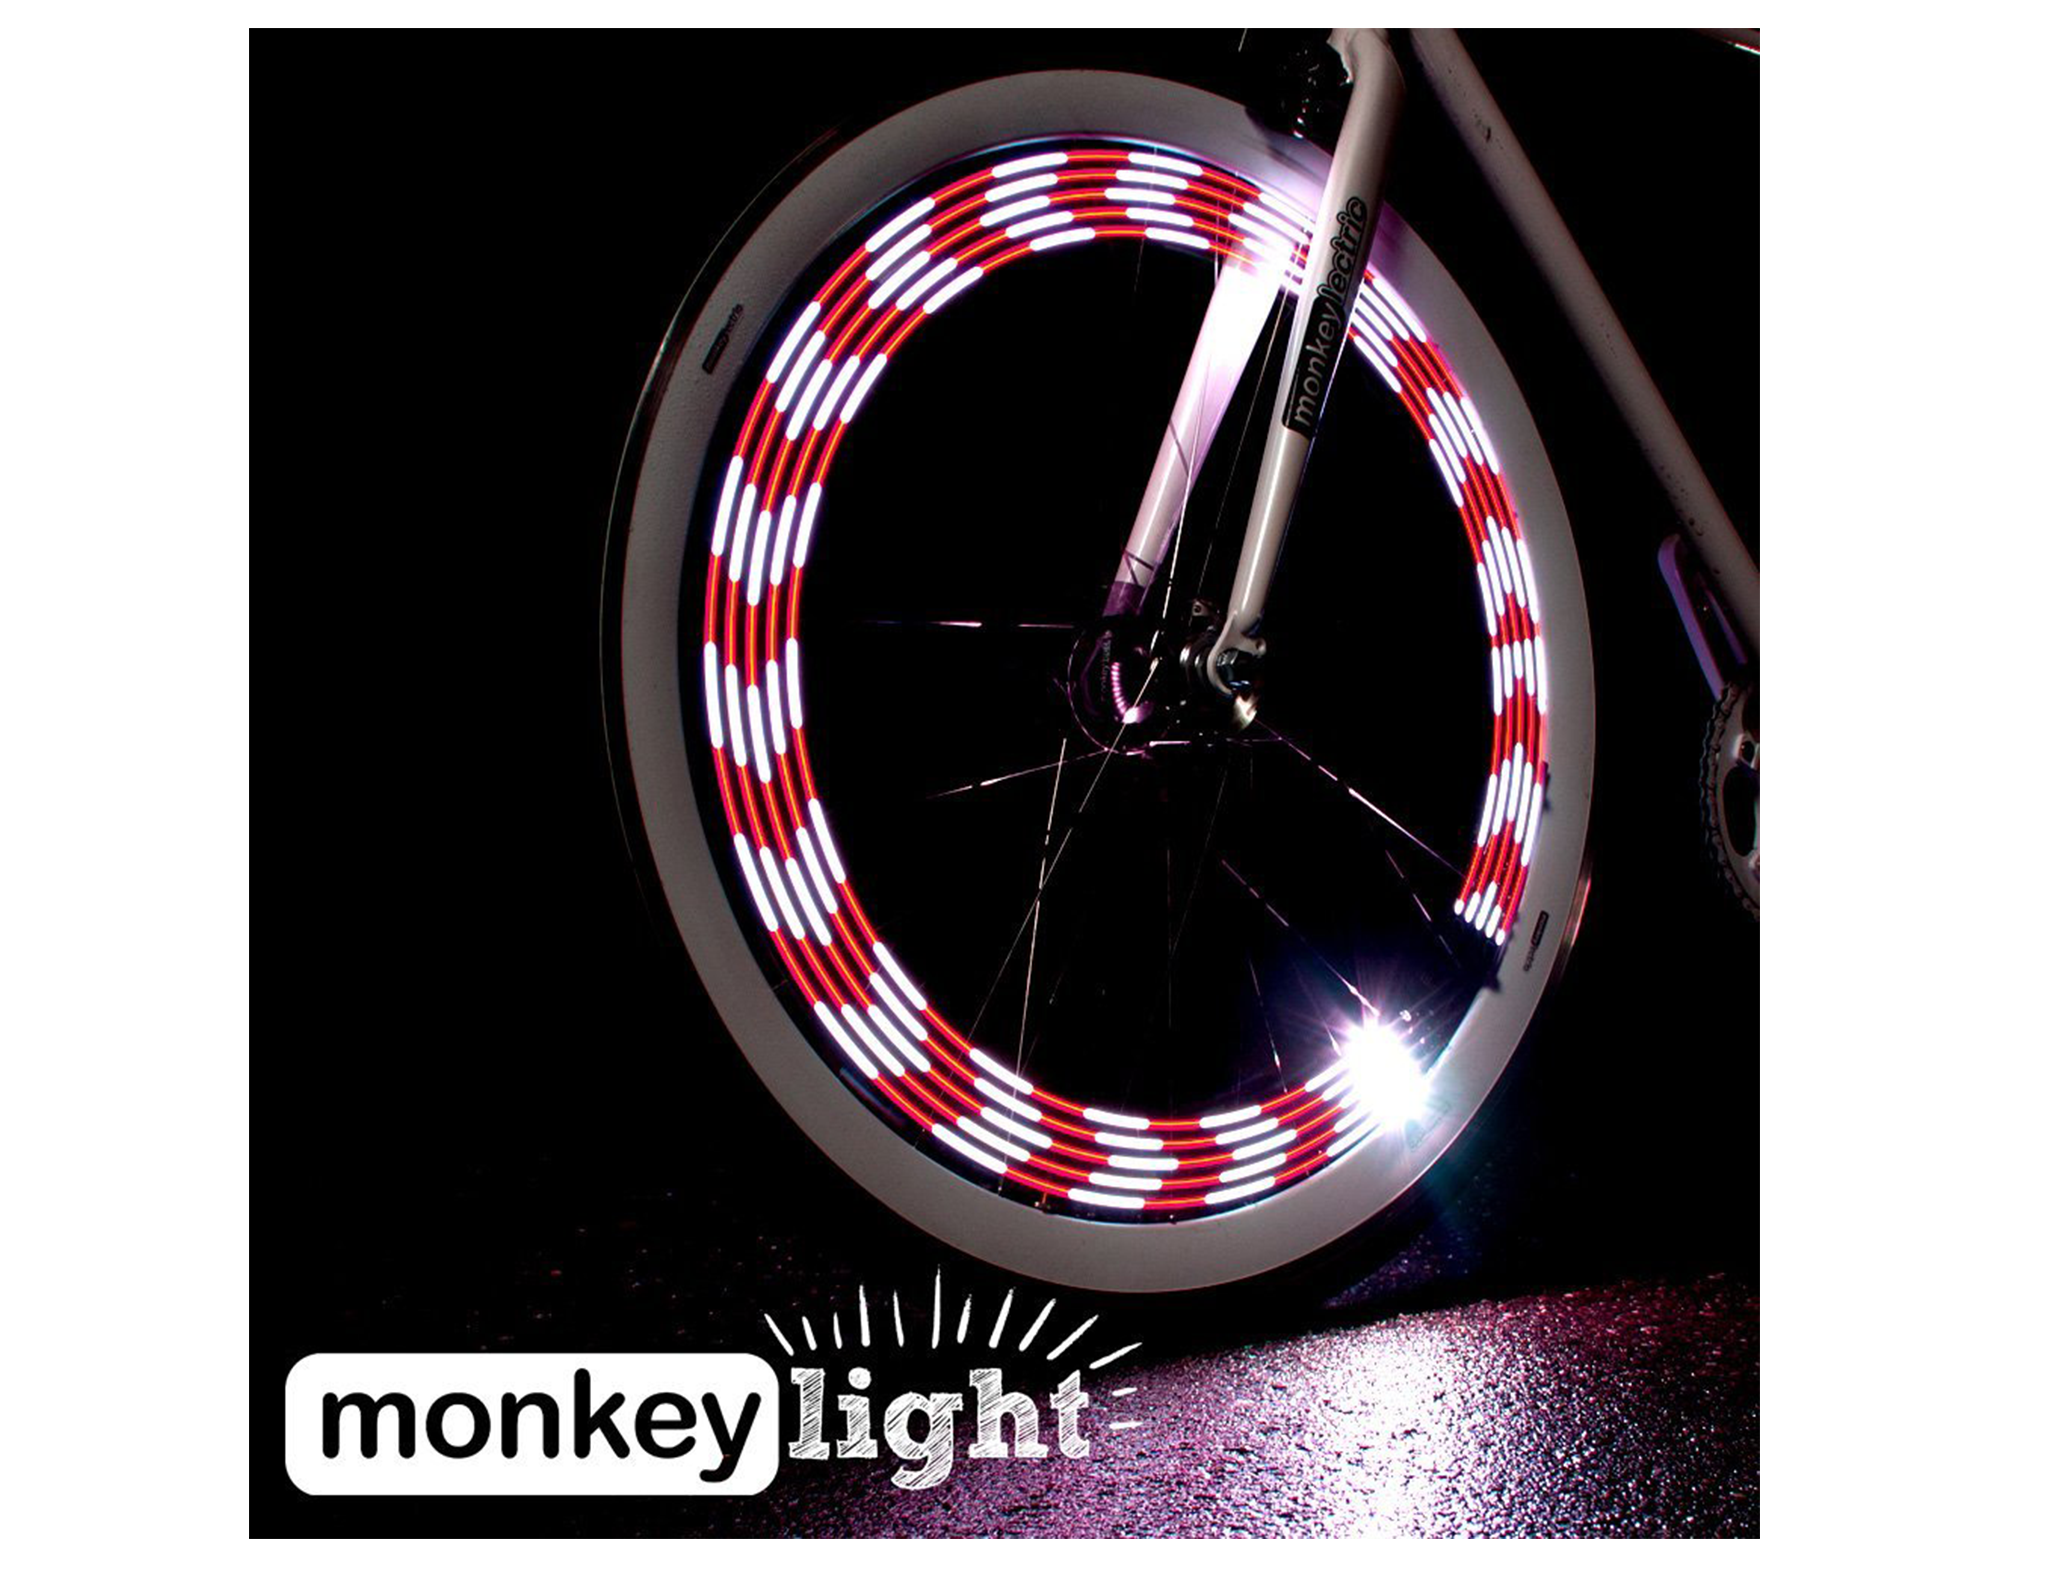 Monkeylectric Monkey Lights